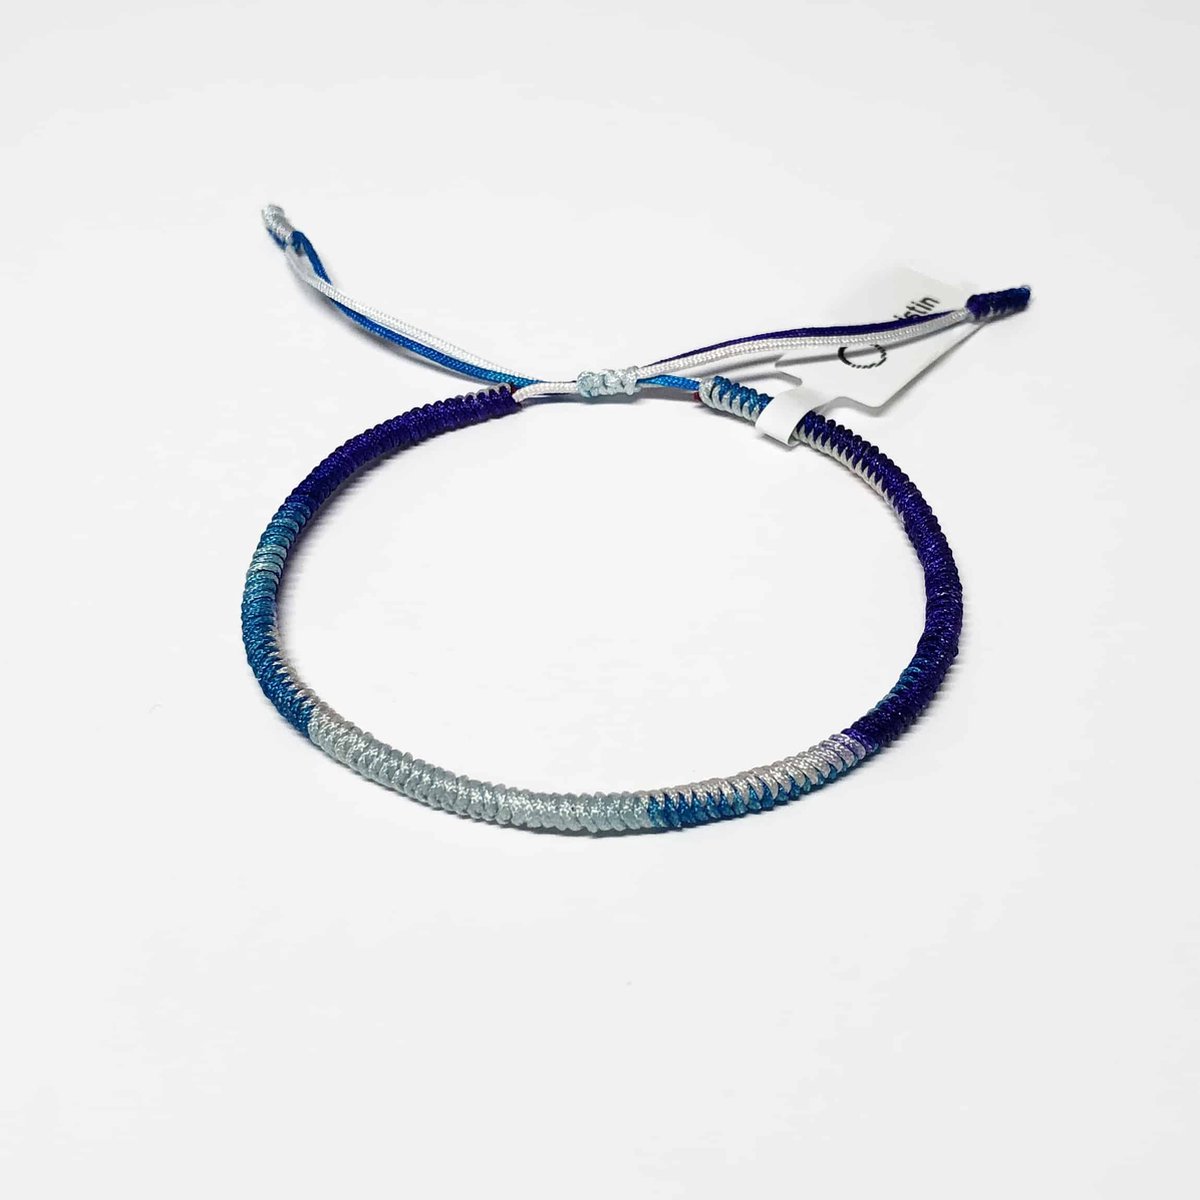 Wristin - Tibetaanse armband verloop paars/blauw/wit